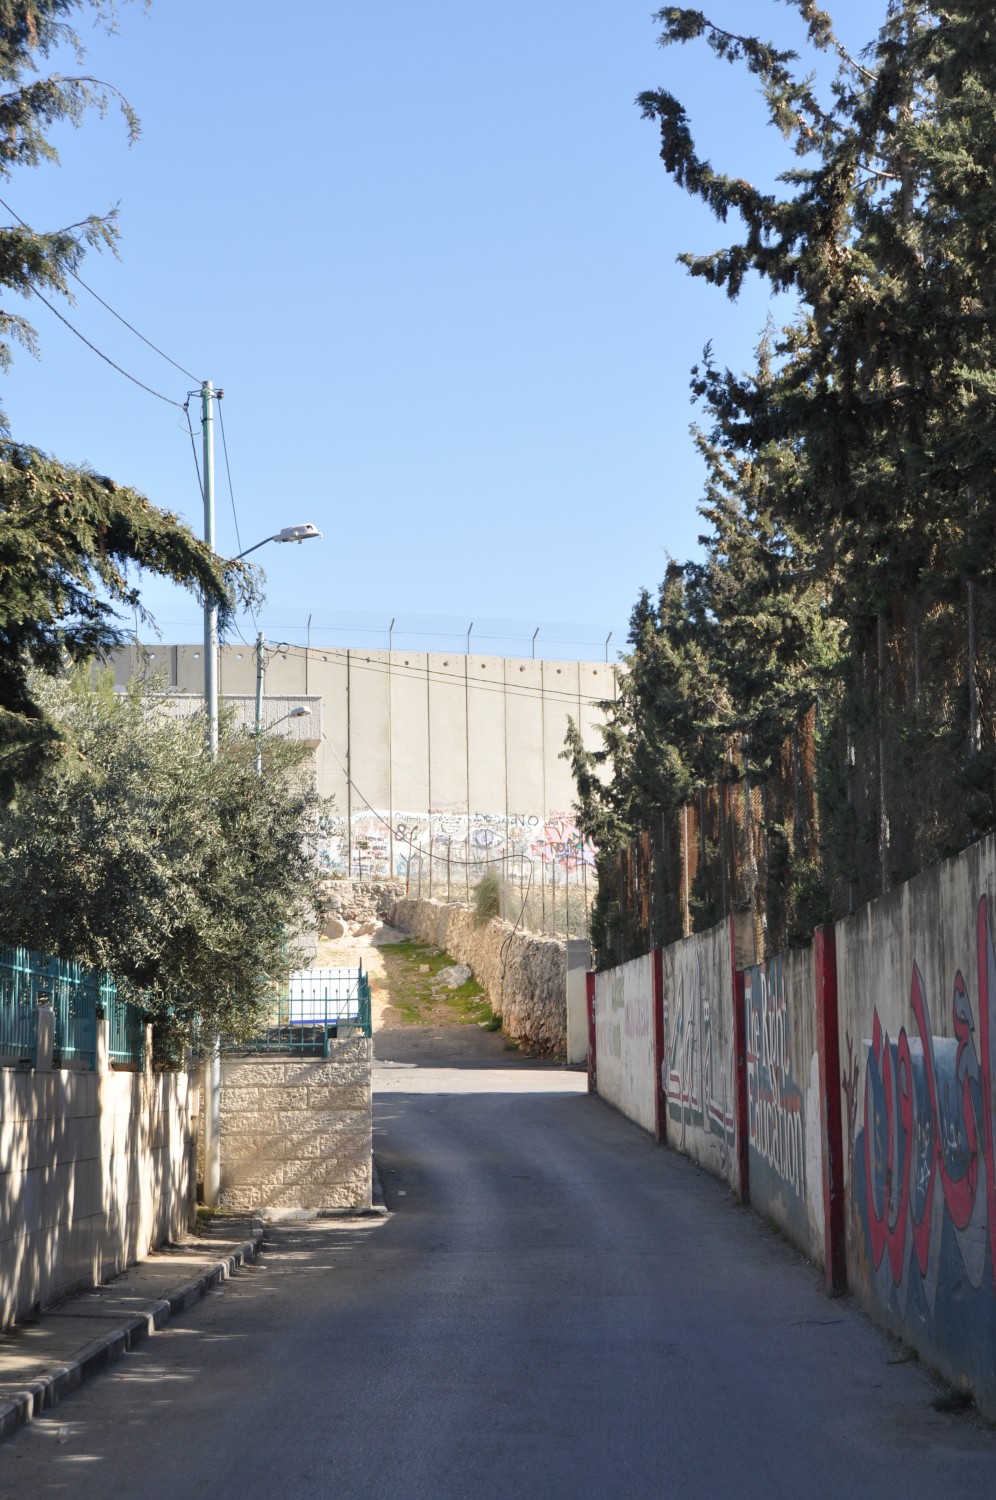 The Bethlehem Wall